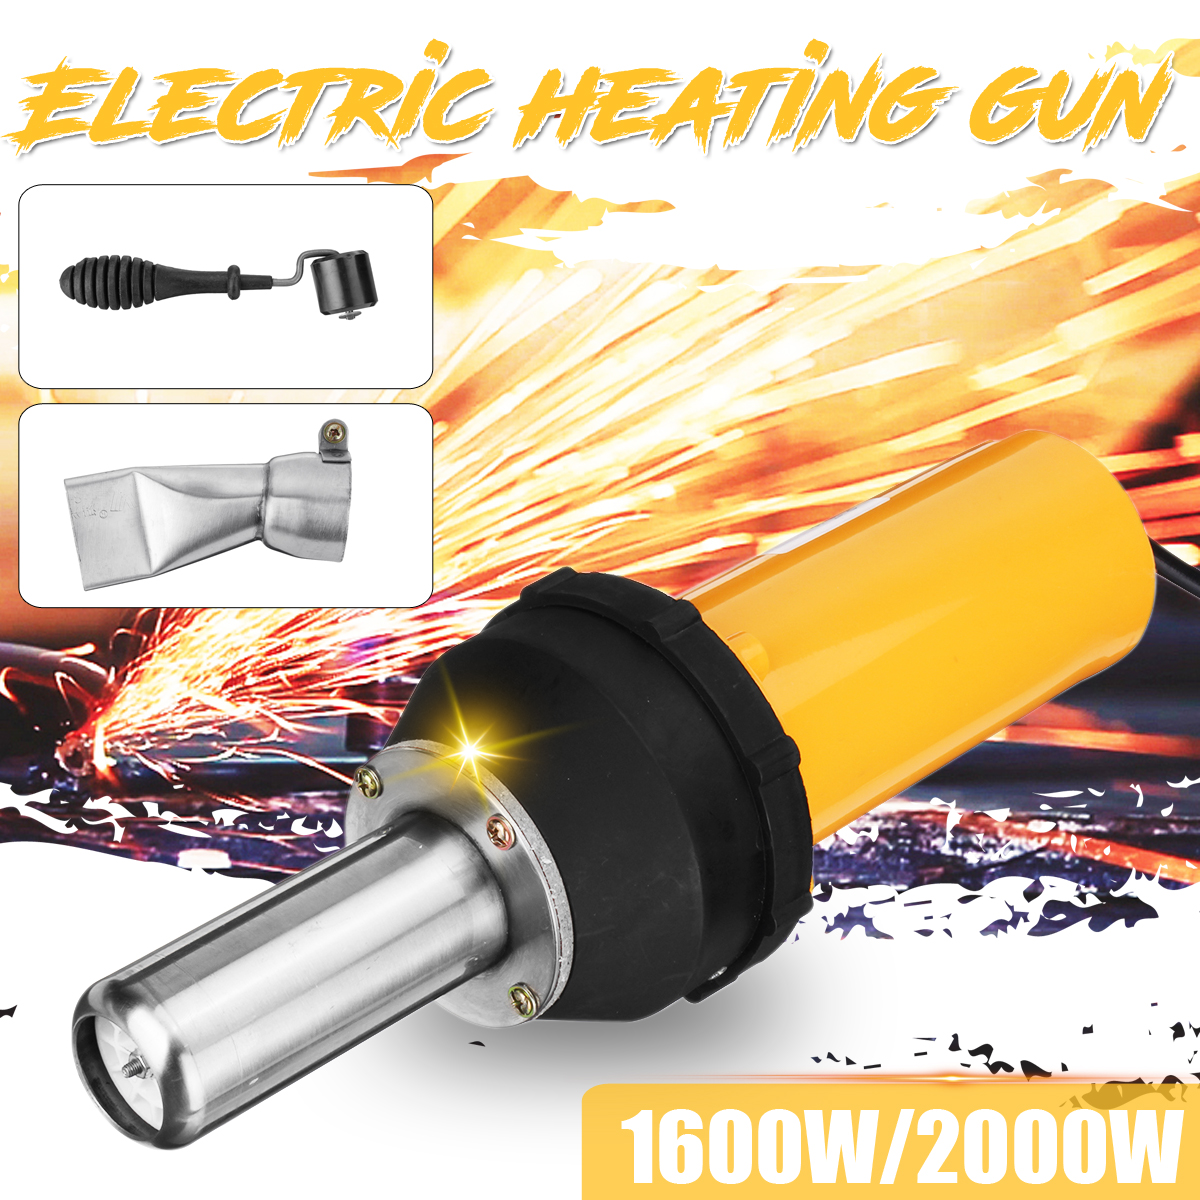 1600W2000W-220V-Electric-Corded-Hot-Air-Gun-Heat-Tool-Welding-Heating-Welders-Workshop-Tool-1808589-2